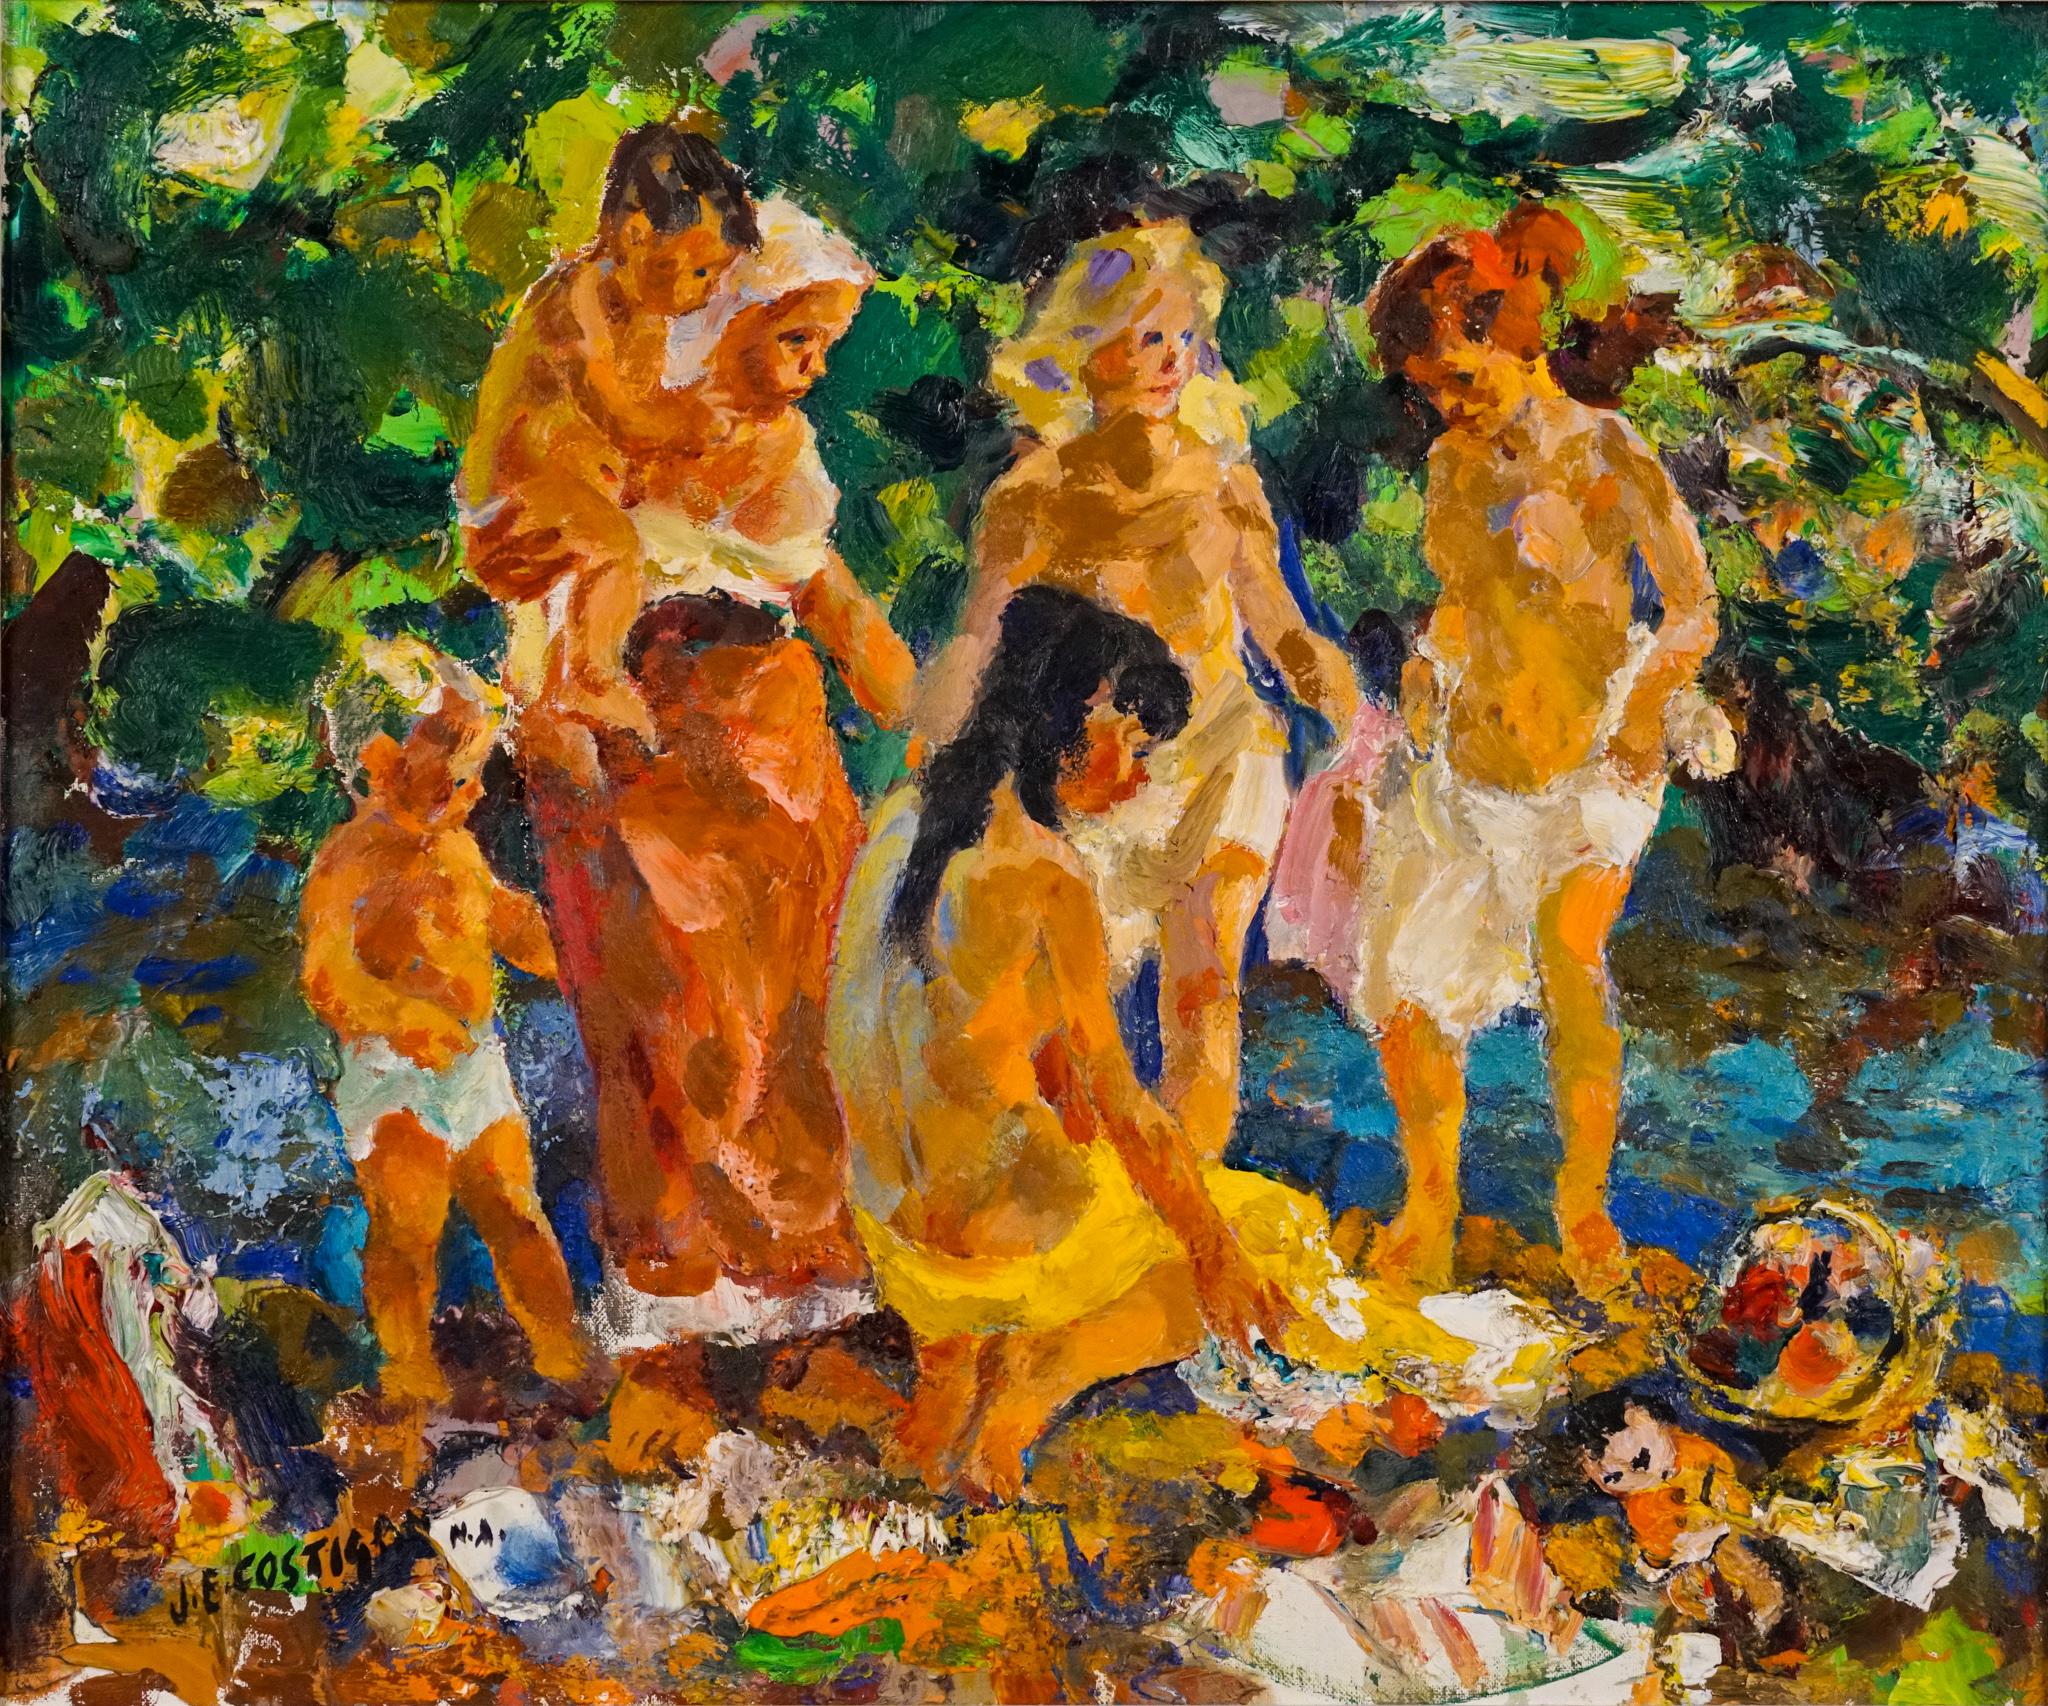 Bathers - Painting by John Edward Costigan